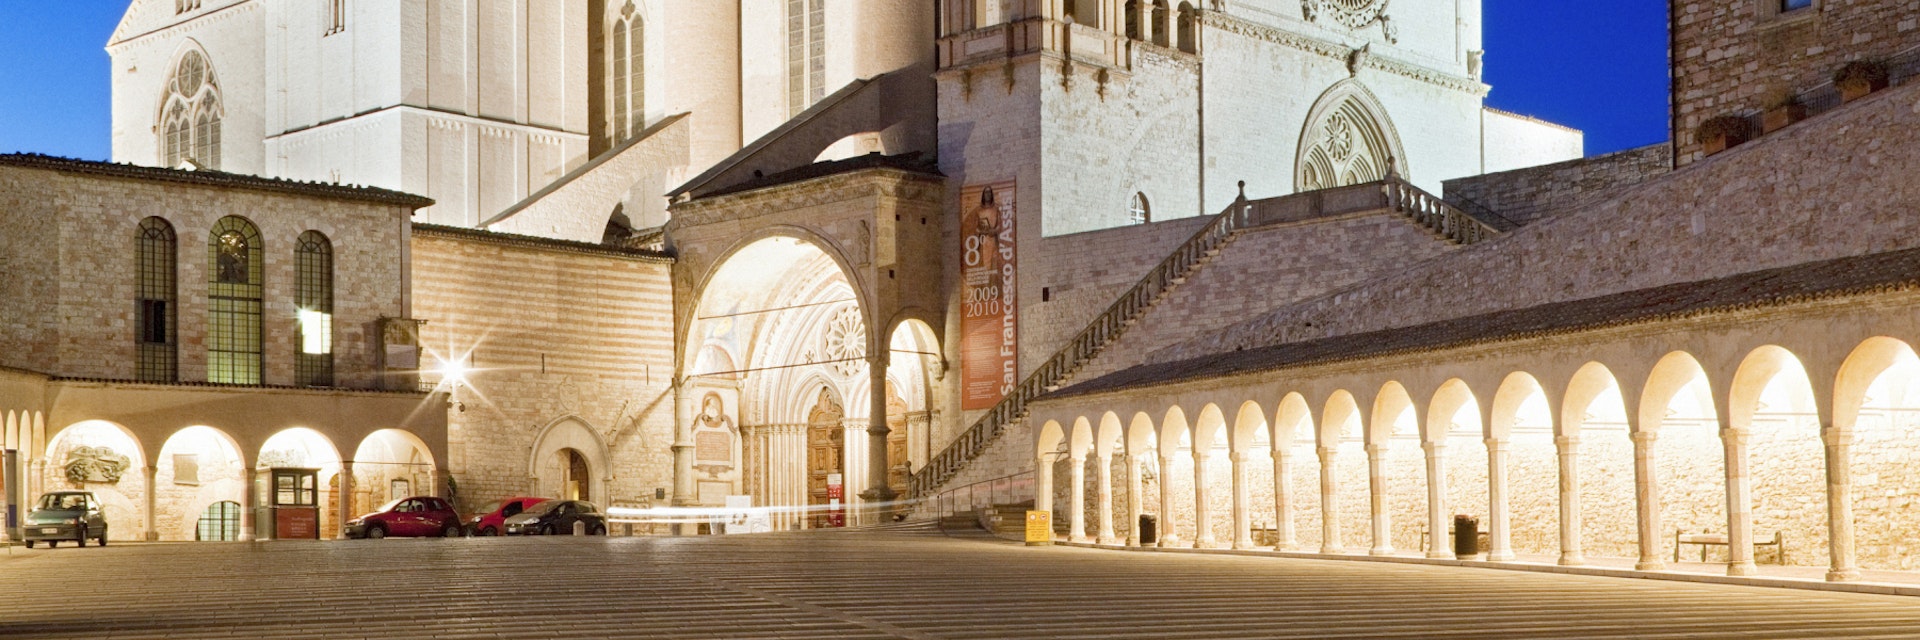 Italy, Umbria, Assisi, Basilica of San Francesco